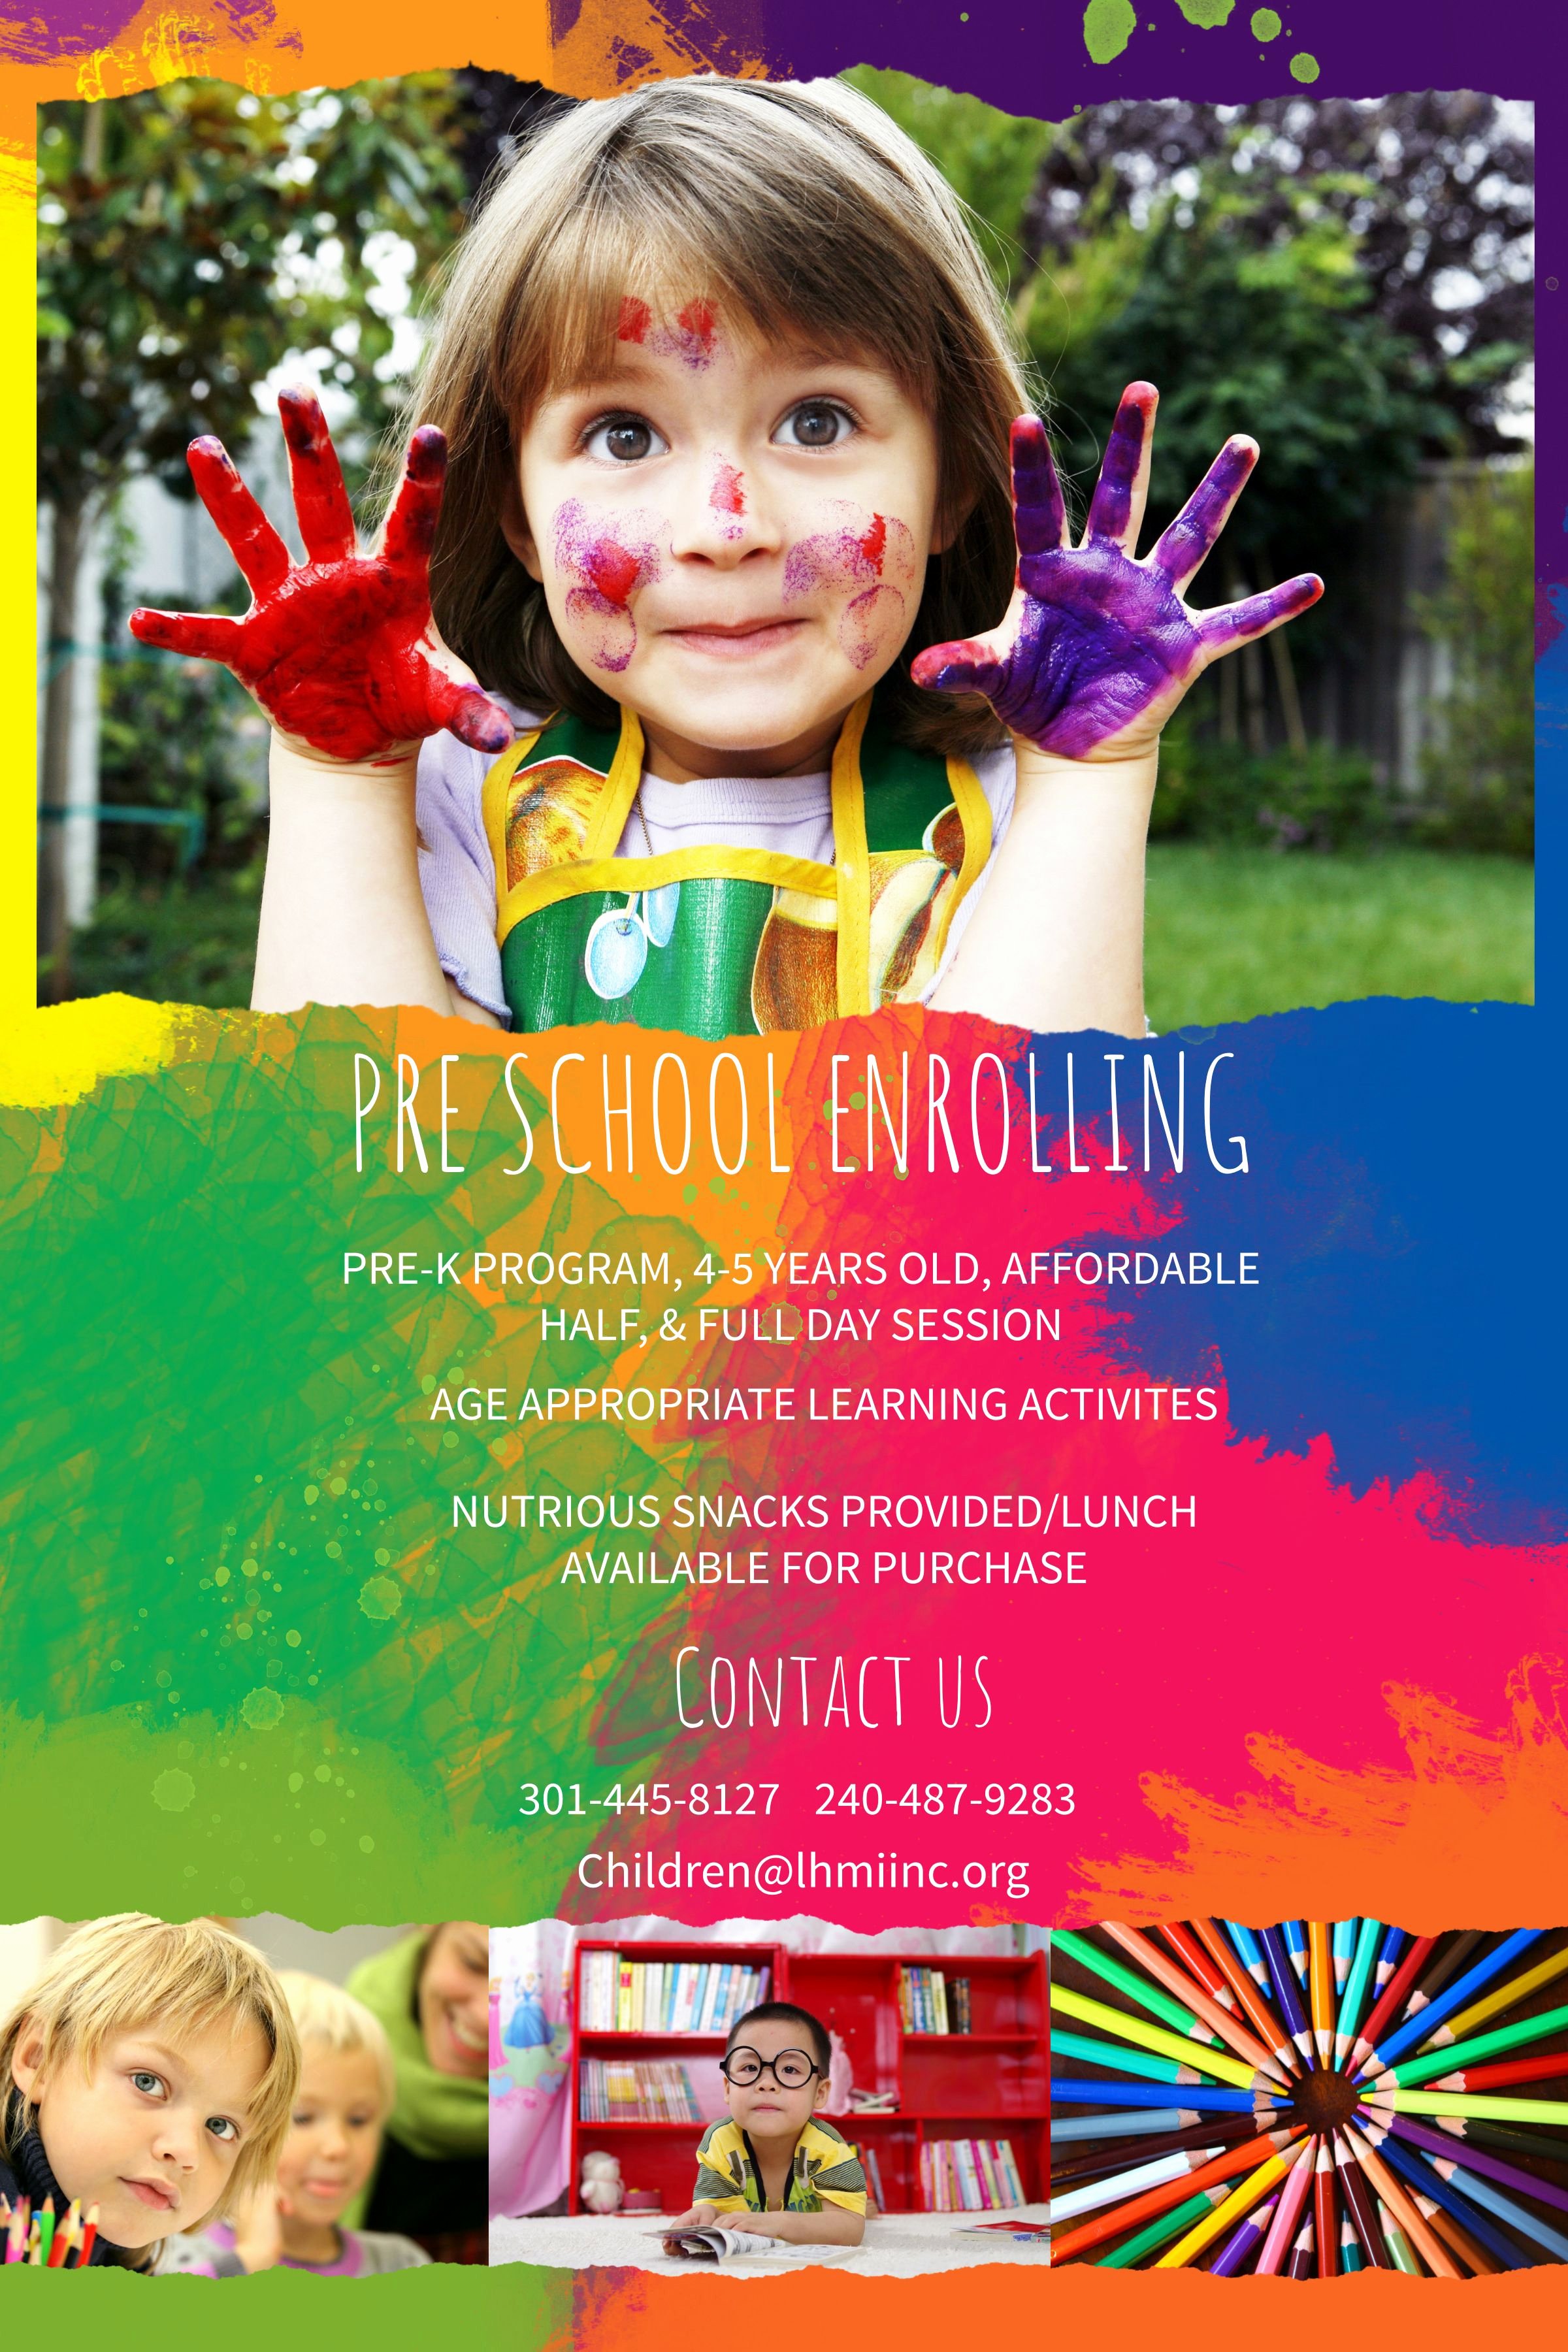 Preschool Flyer Template Free Fresh Preschool Enrollment Colorful Poster Flyer Template